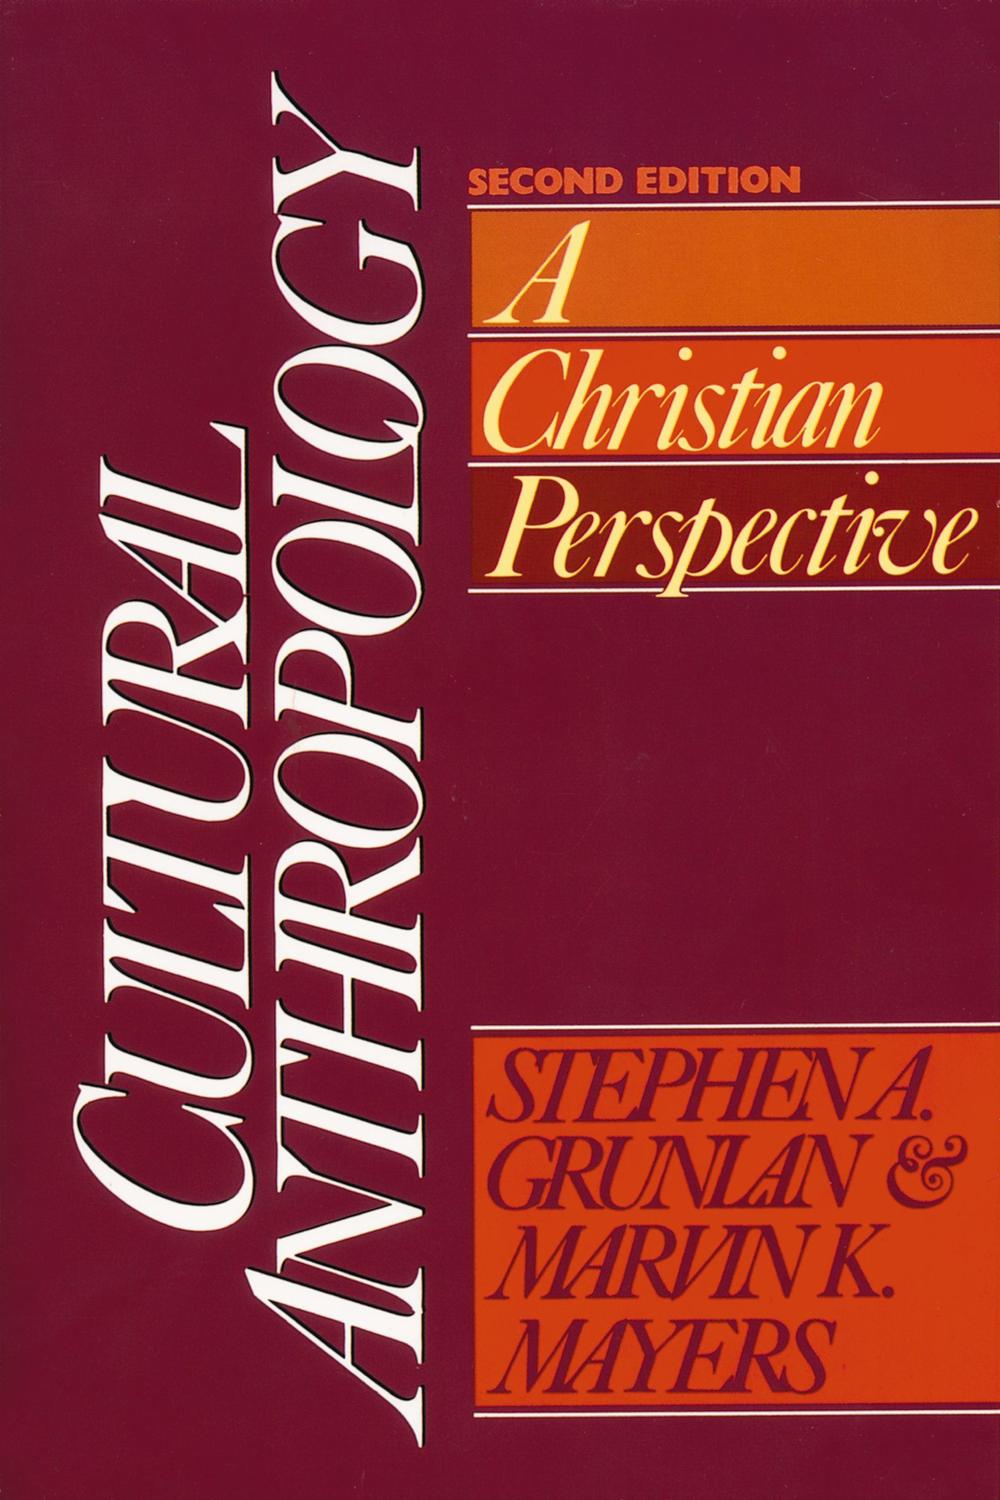 Cultural Anthropology - Stephen A. Grunlan, Marvin K. Mayers